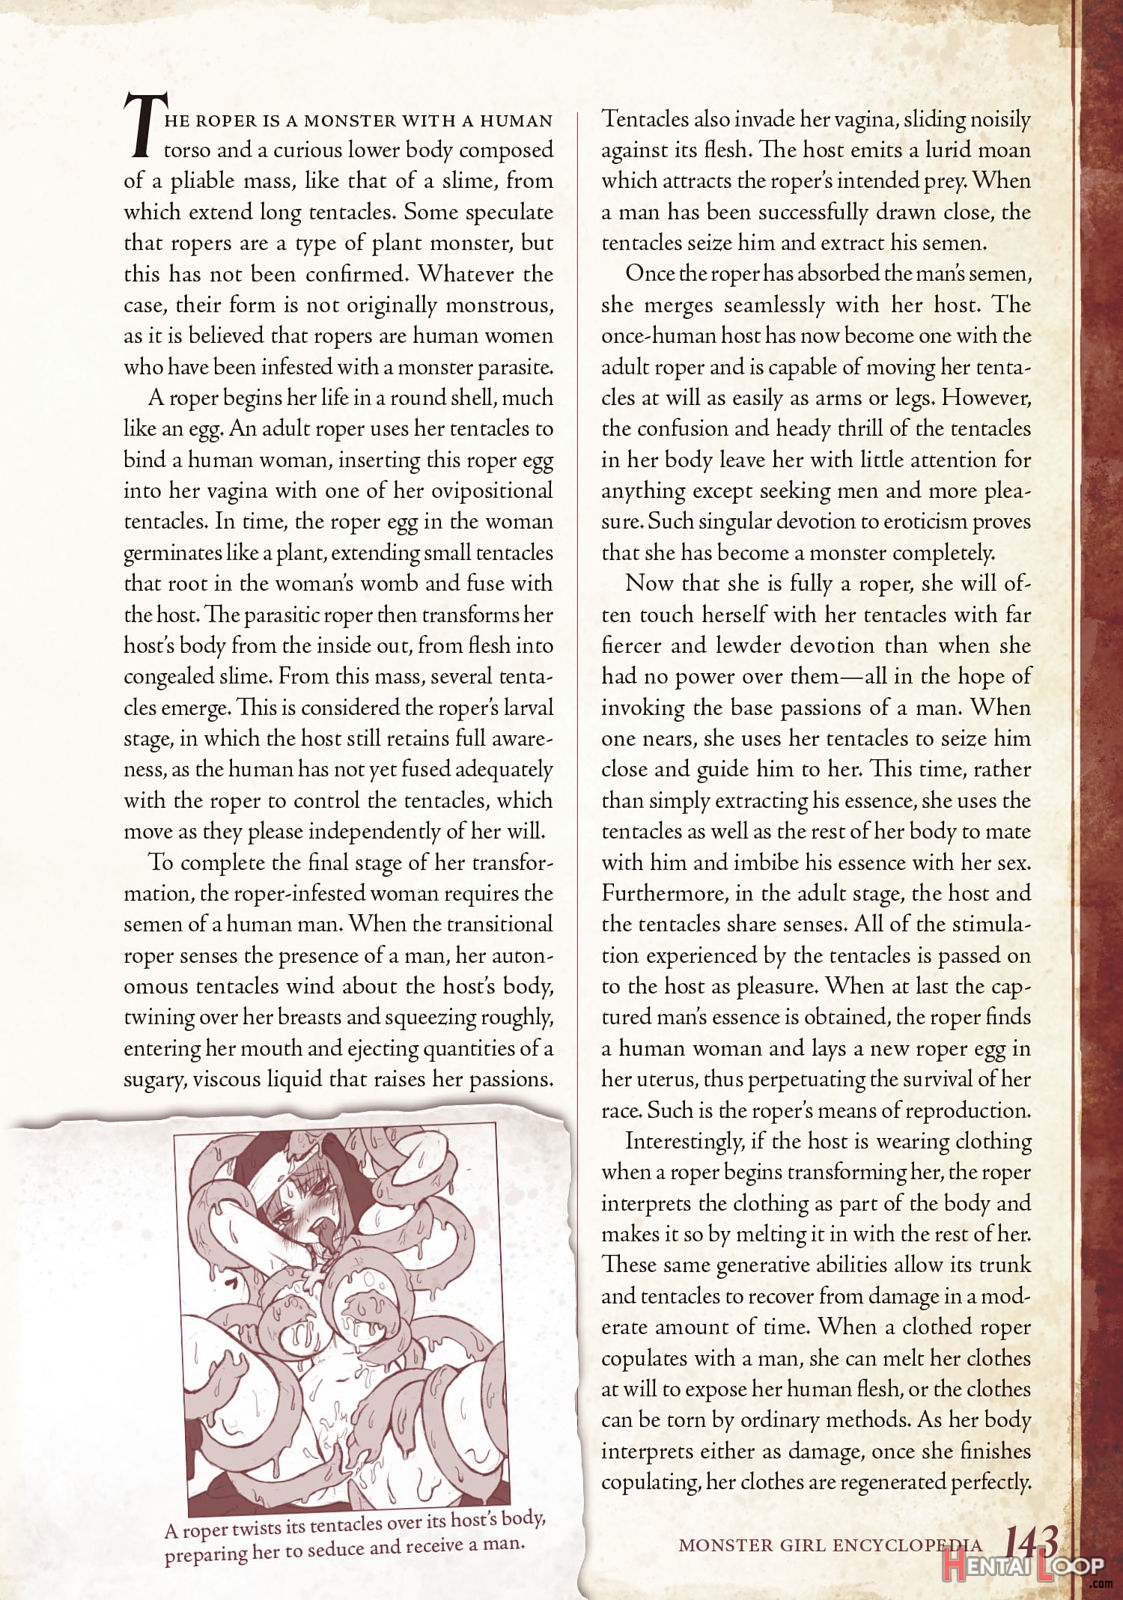 Monster Girl Encyclopedia Vol. 1 page 144